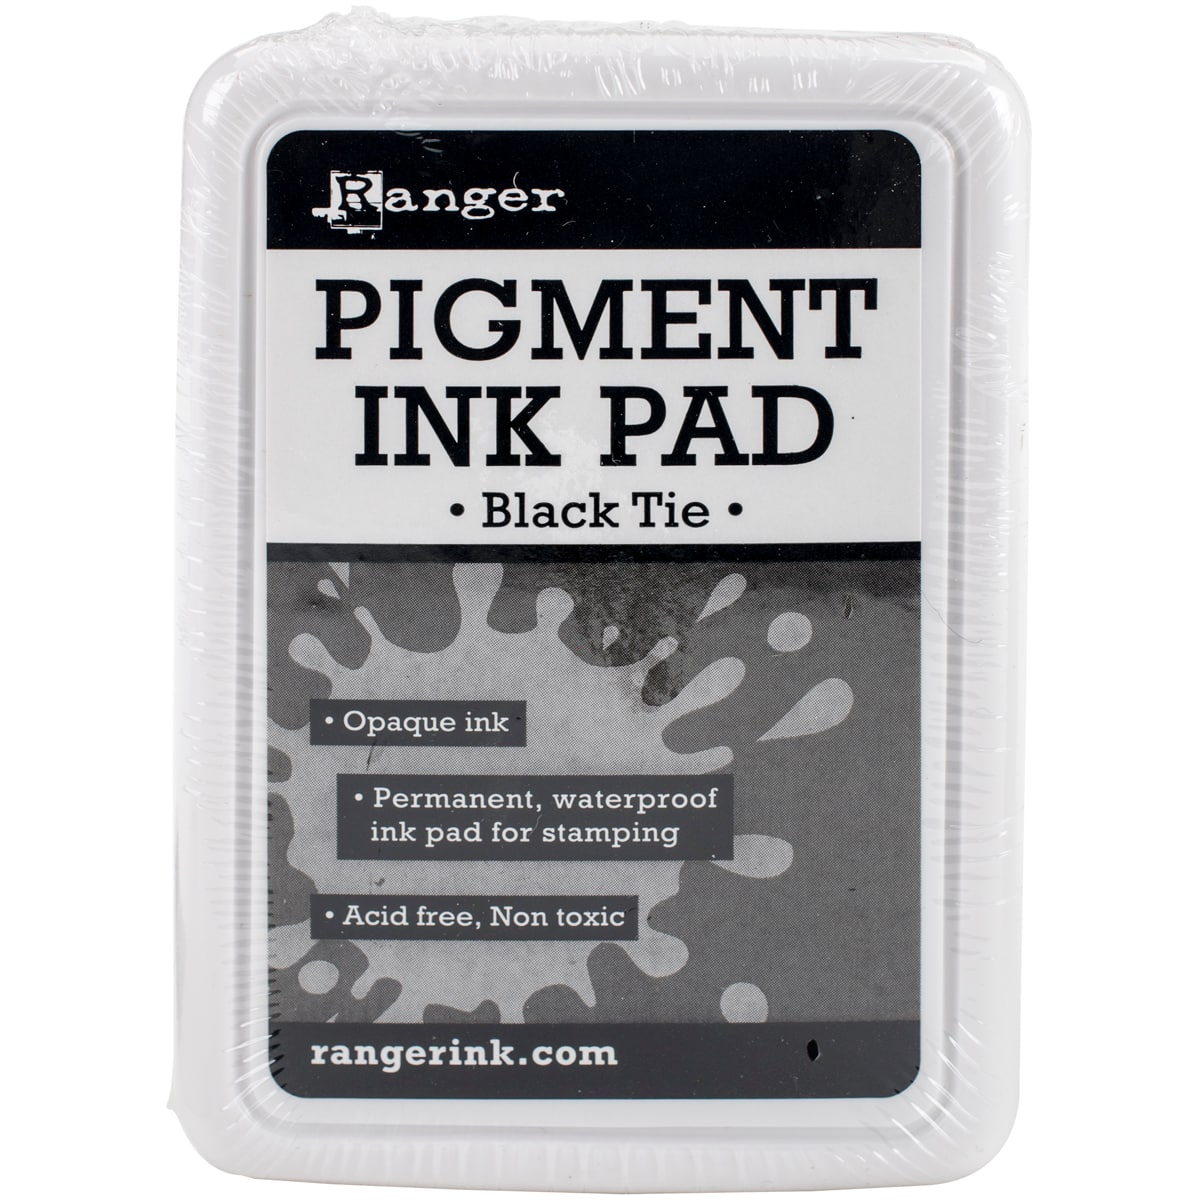 Ranger Pigment Black Tie Ink Pad